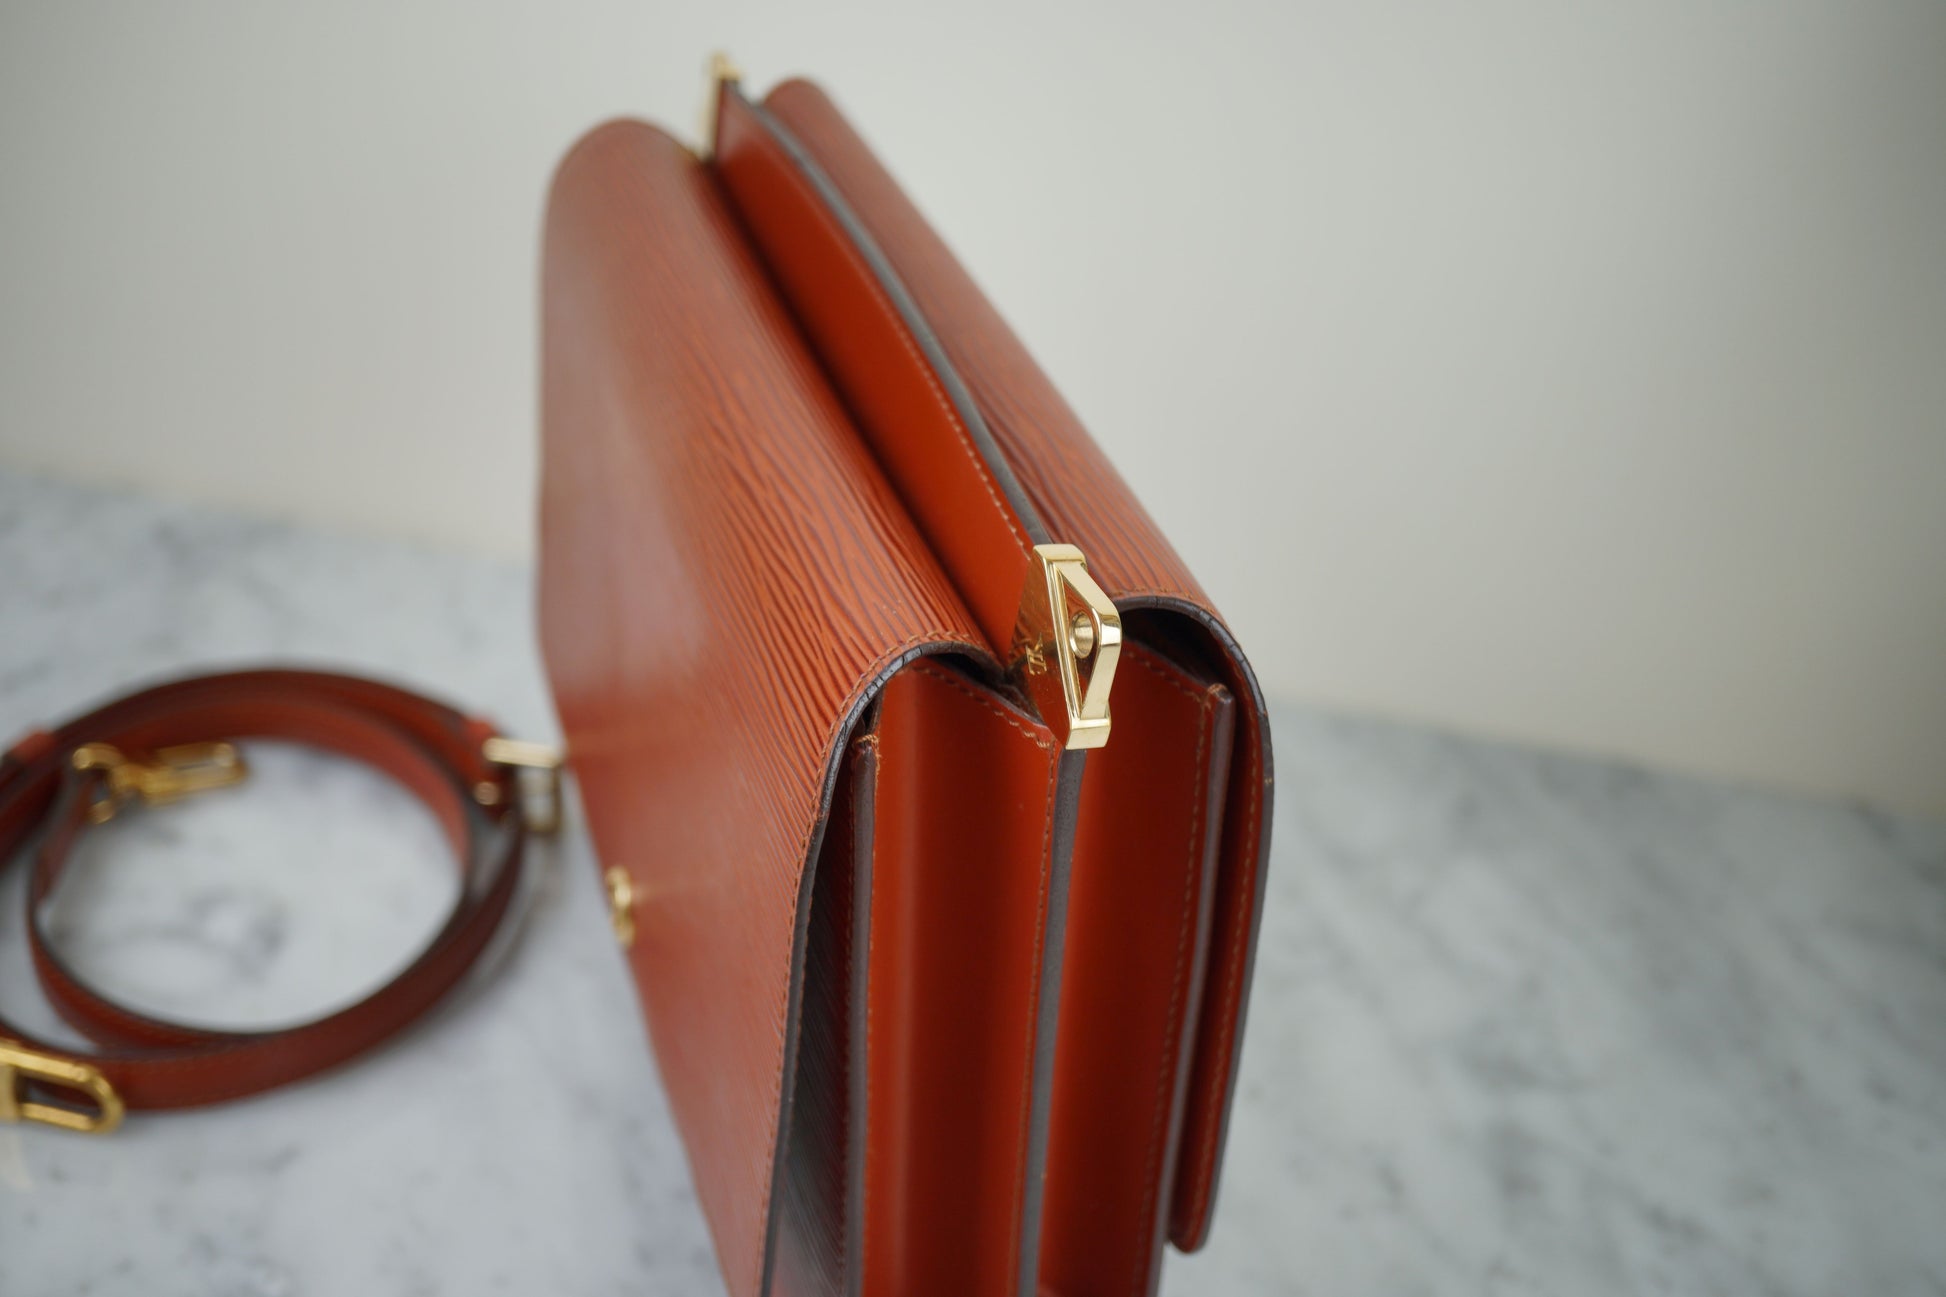 Vintage Louis Vuitton black epi mod clutch purse, shoulder bag with a –  eNdApPi ***where you can find your favorite designer  vintages..authentic, affordable, and lovable.